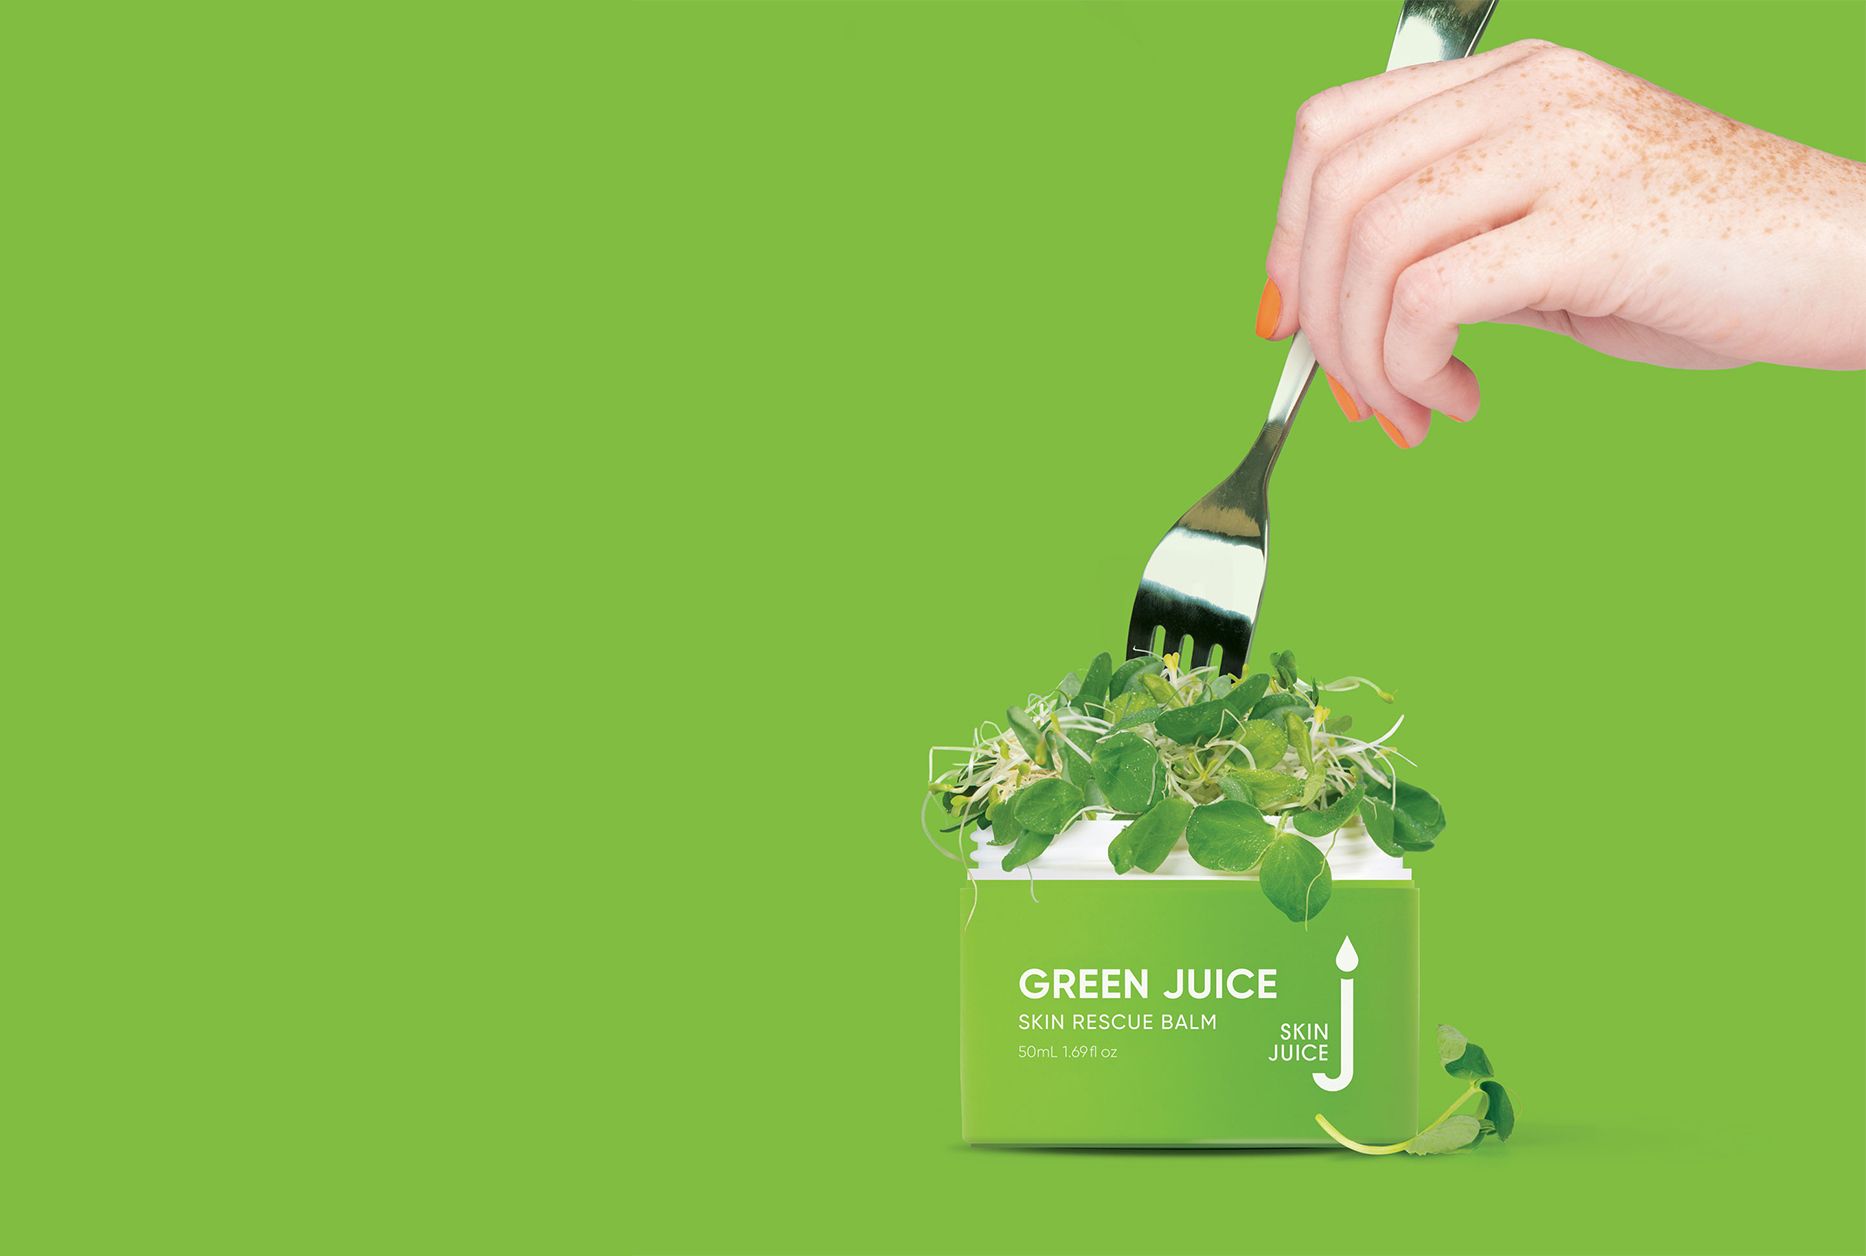 25 Years of Green Juice